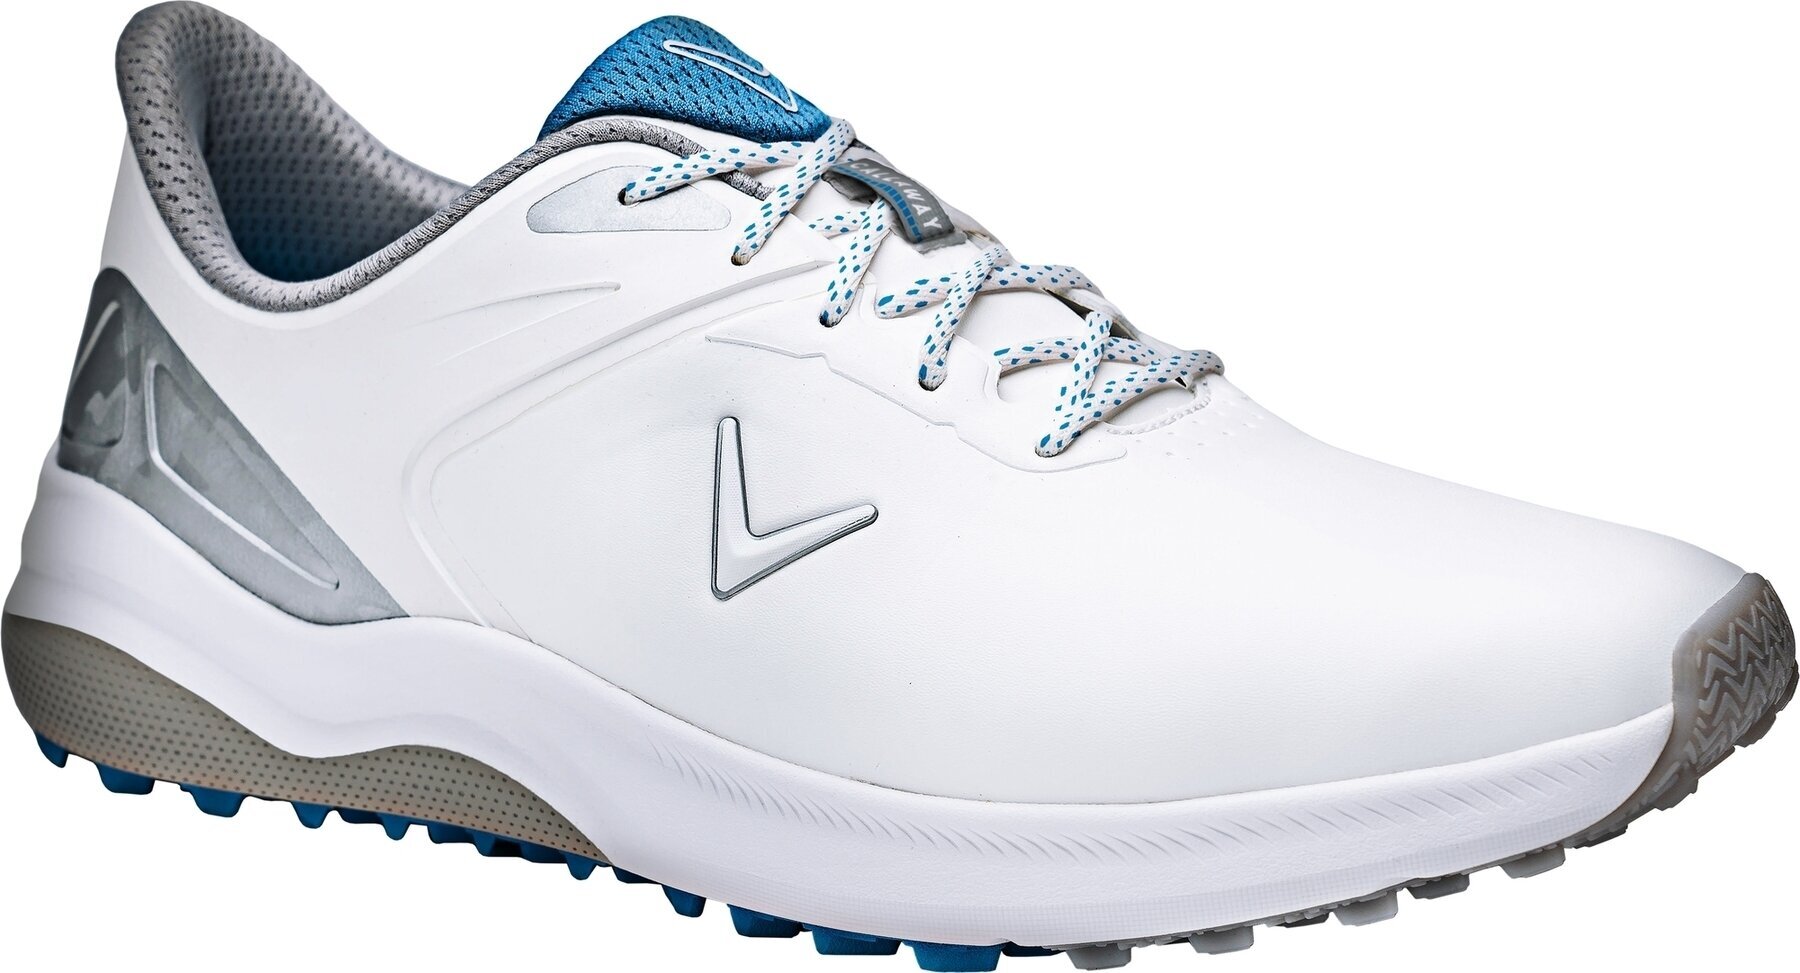 Miesten golfkengät Callaway Lazer Mens Golf Shoes White/Silver 44